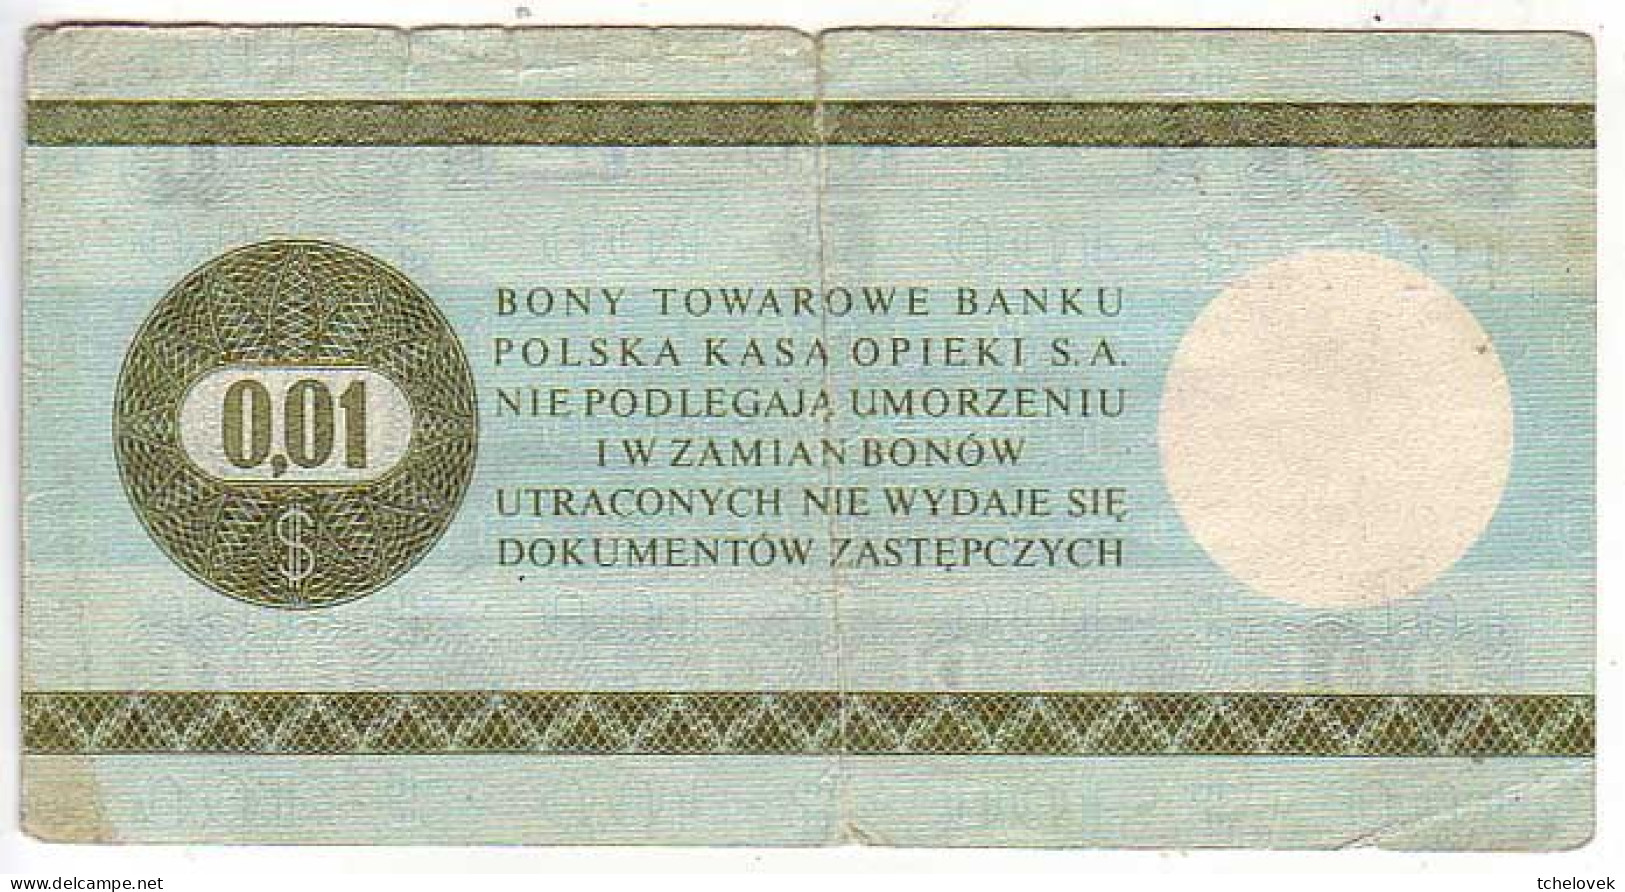 (Billets). Pologne. Communist Poland. Foreing Exchange Certificate. Bon Towarowy PKO 1 C 1979 HL 7457281 & 2c HO 3550148 - Poland